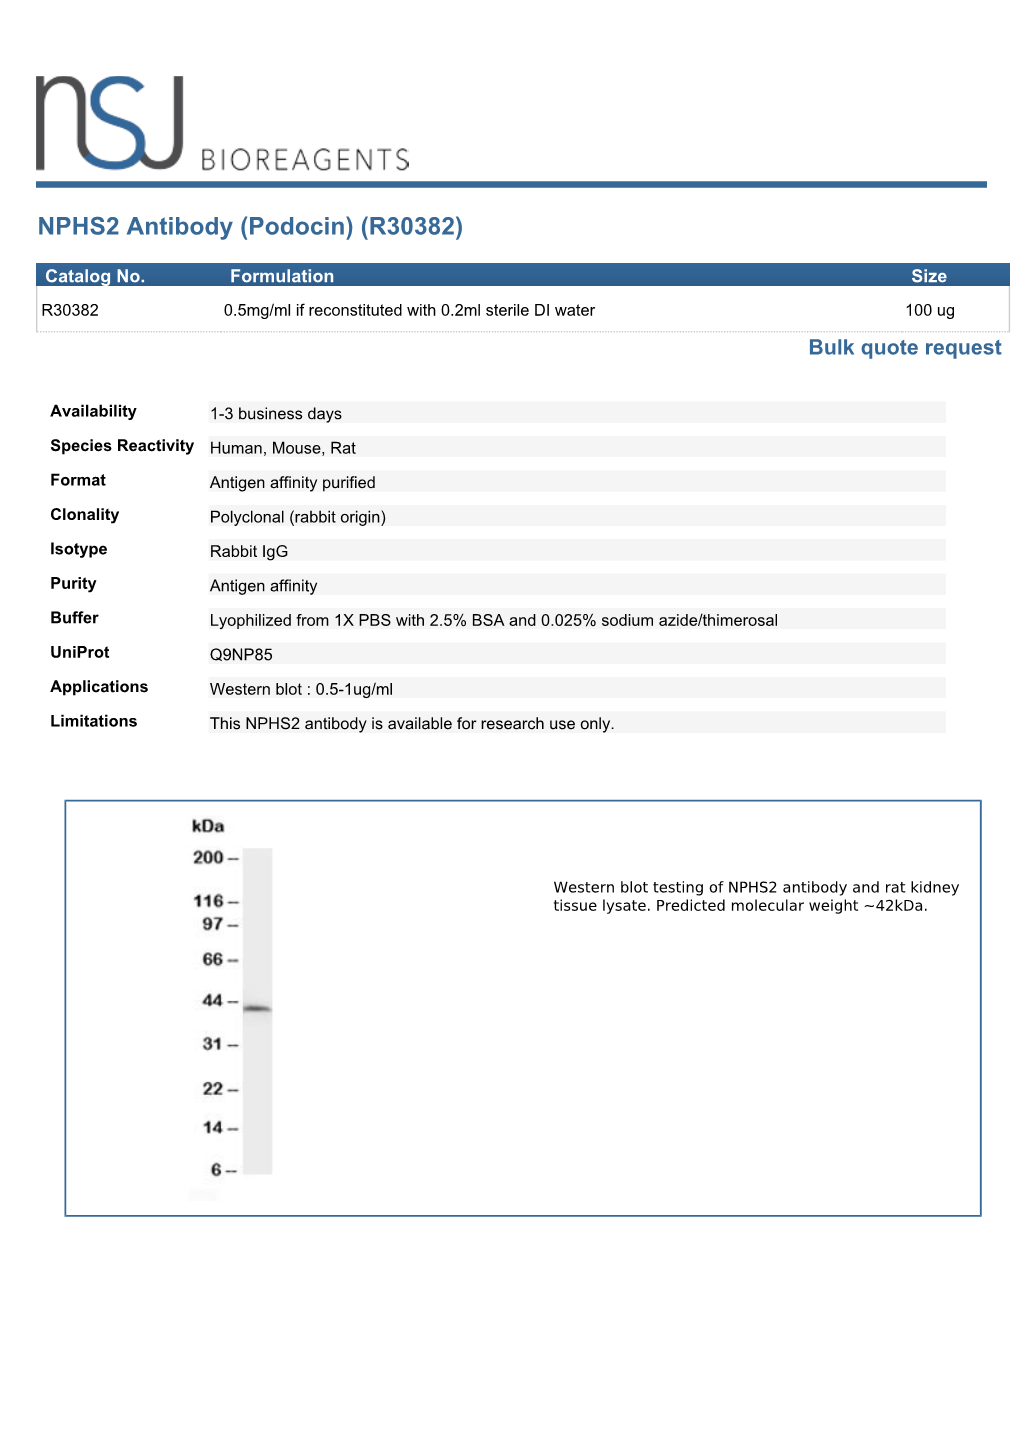 NPHS2 Antibody (Podocin) (R30382)